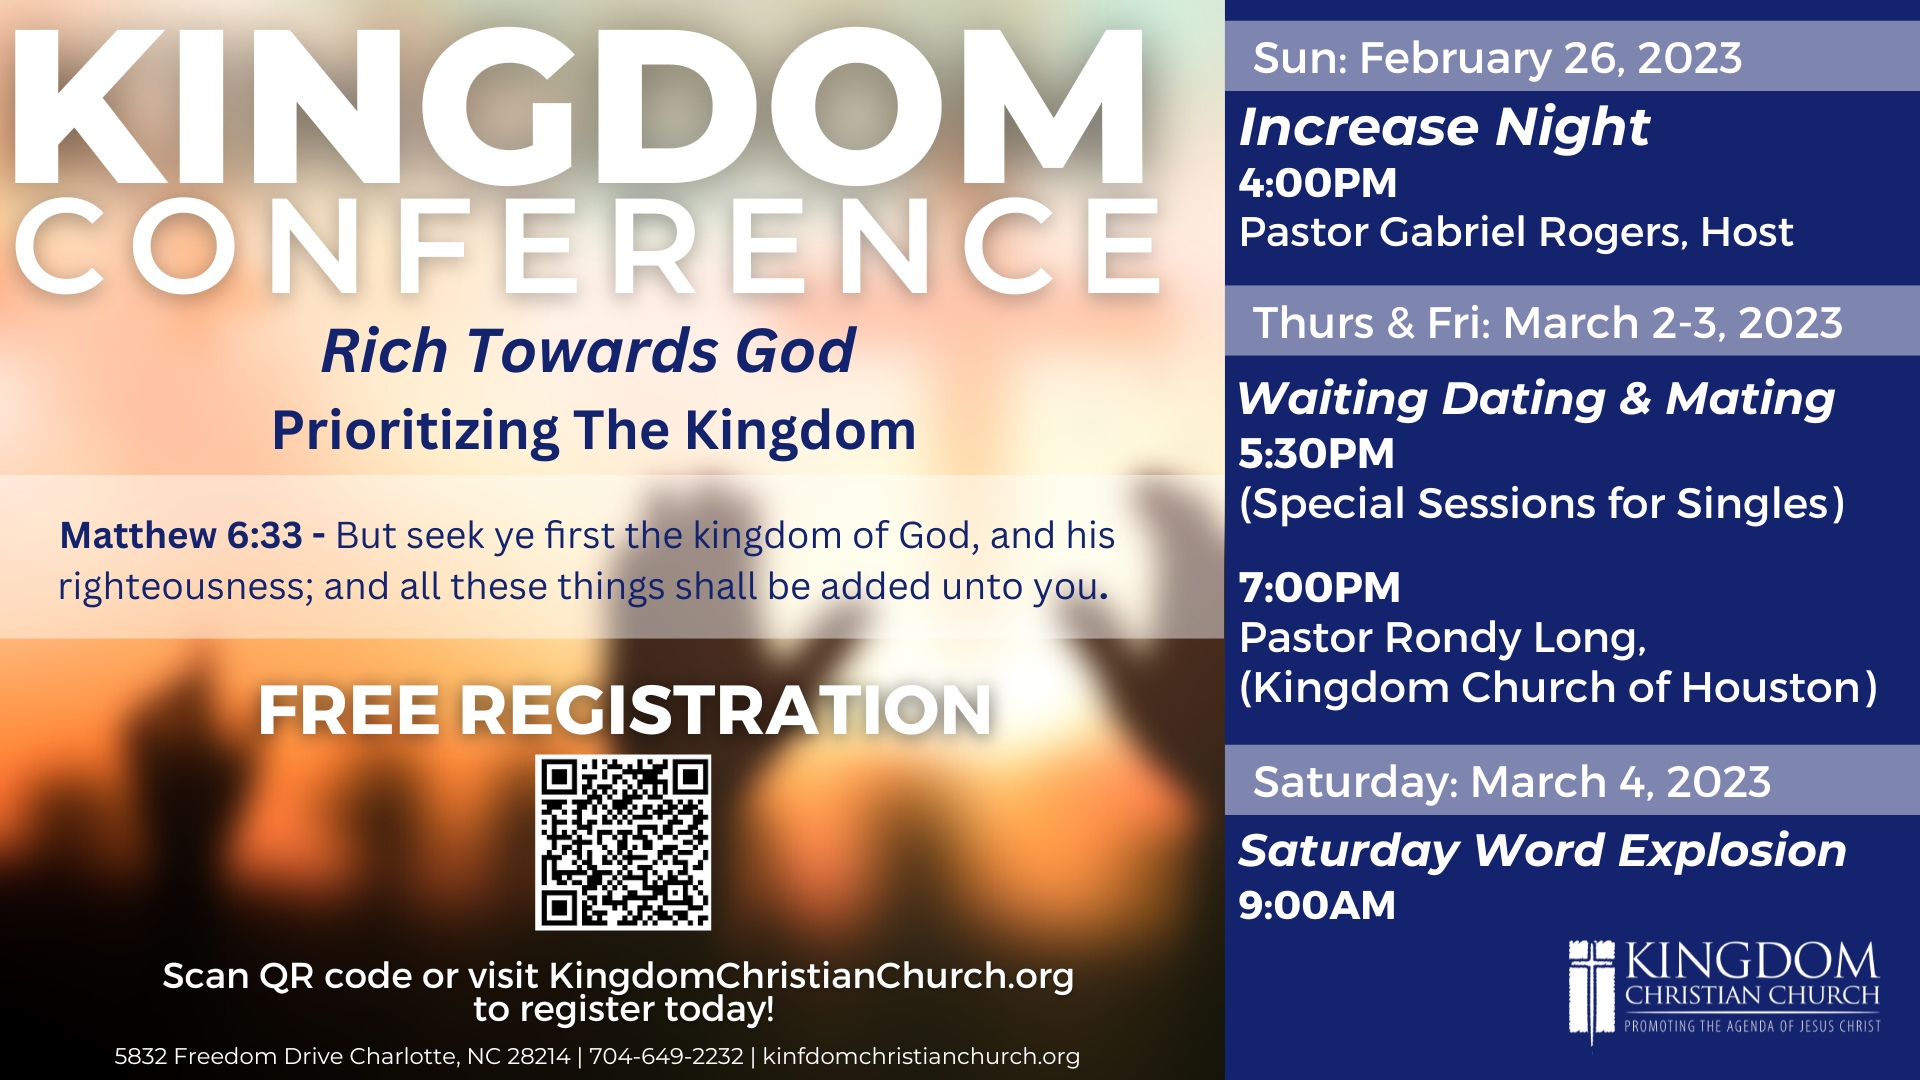 Kingdom Conference 2023 Kingdom Christian Church